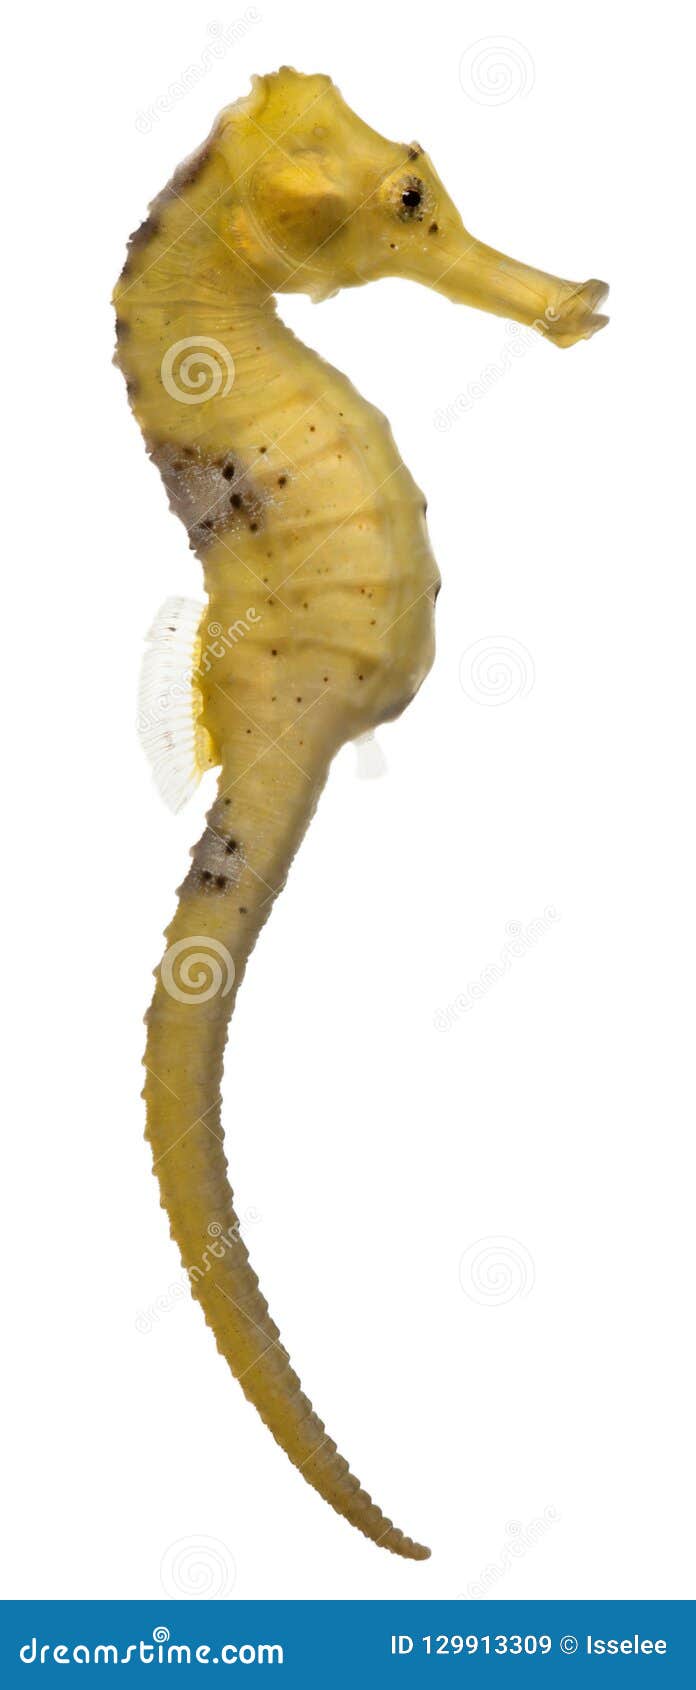 longsnout seahorse or slender seahorse, hippocampus reidi yellowish